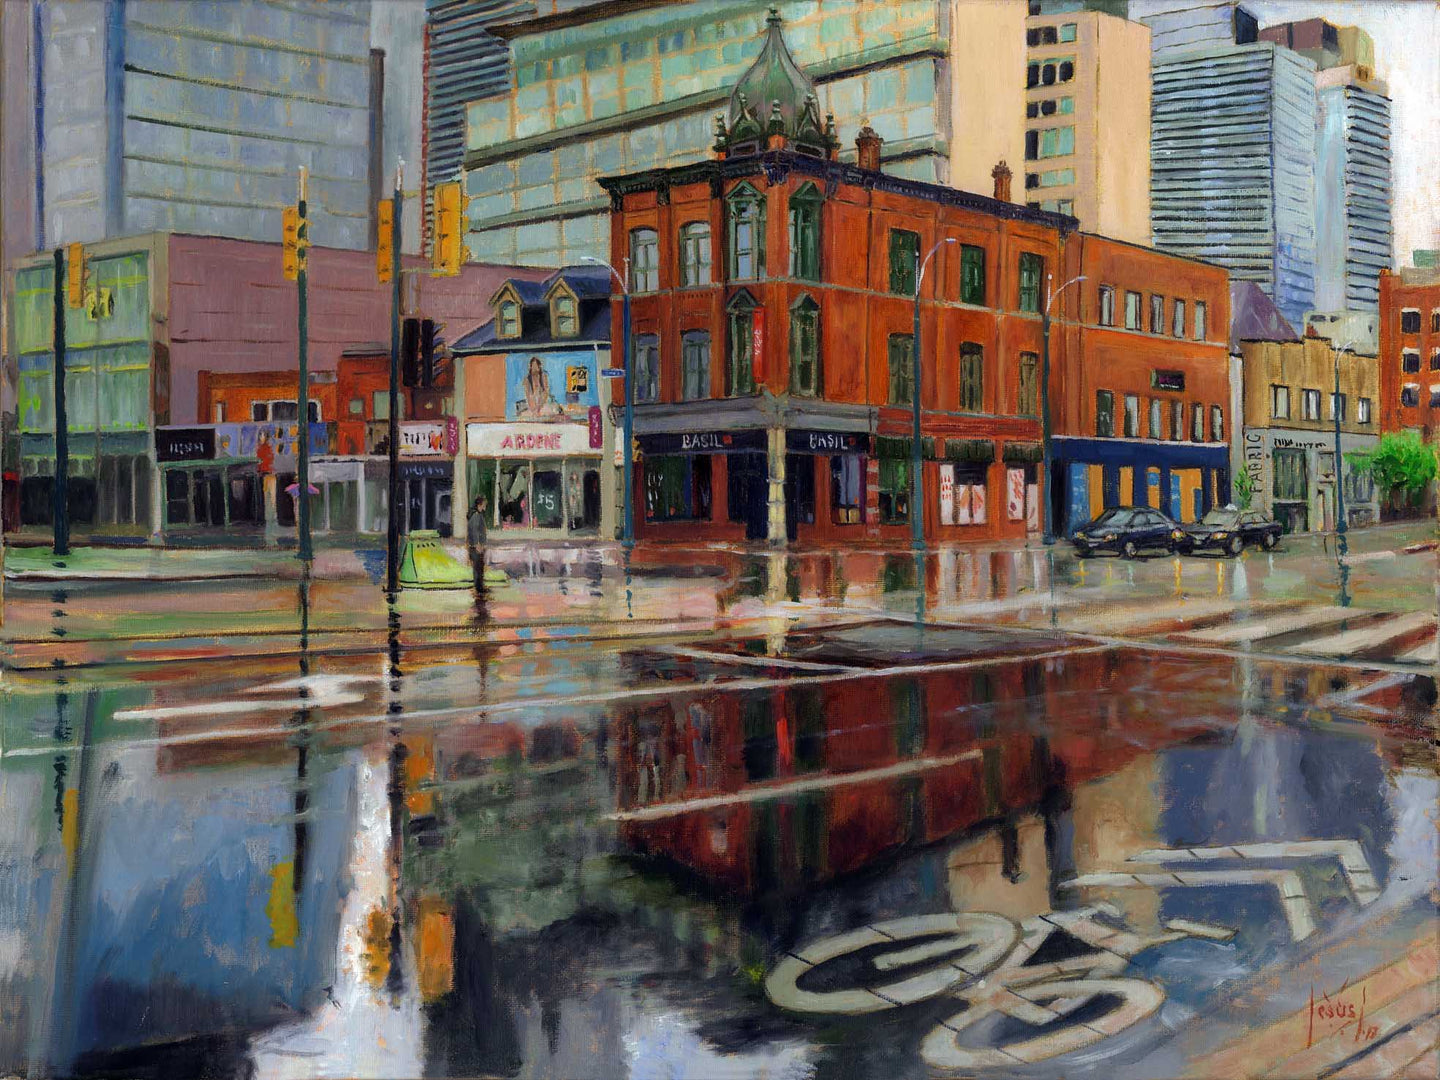 Raining Sunday morning, Toronto, print on canvas. 18 x 24 inch